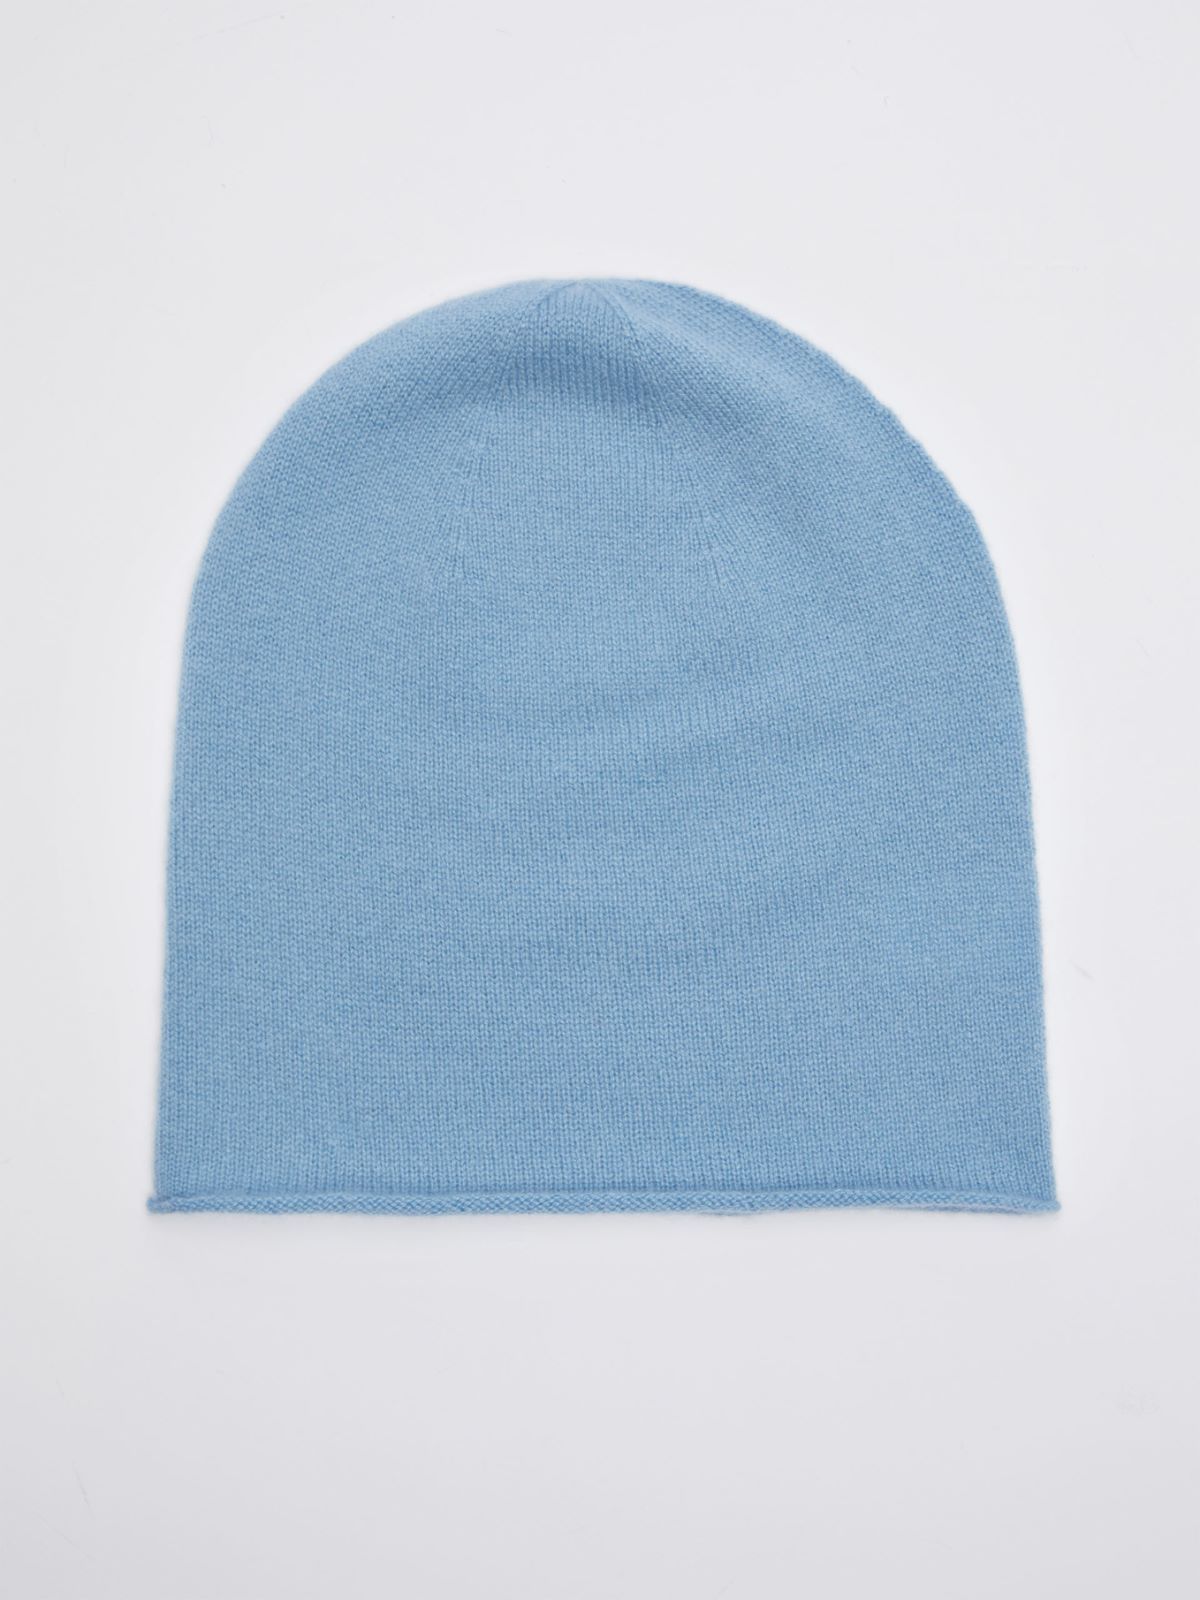 Cashmere beanie hat - LIGHT BLUE - Weekend Max Mara